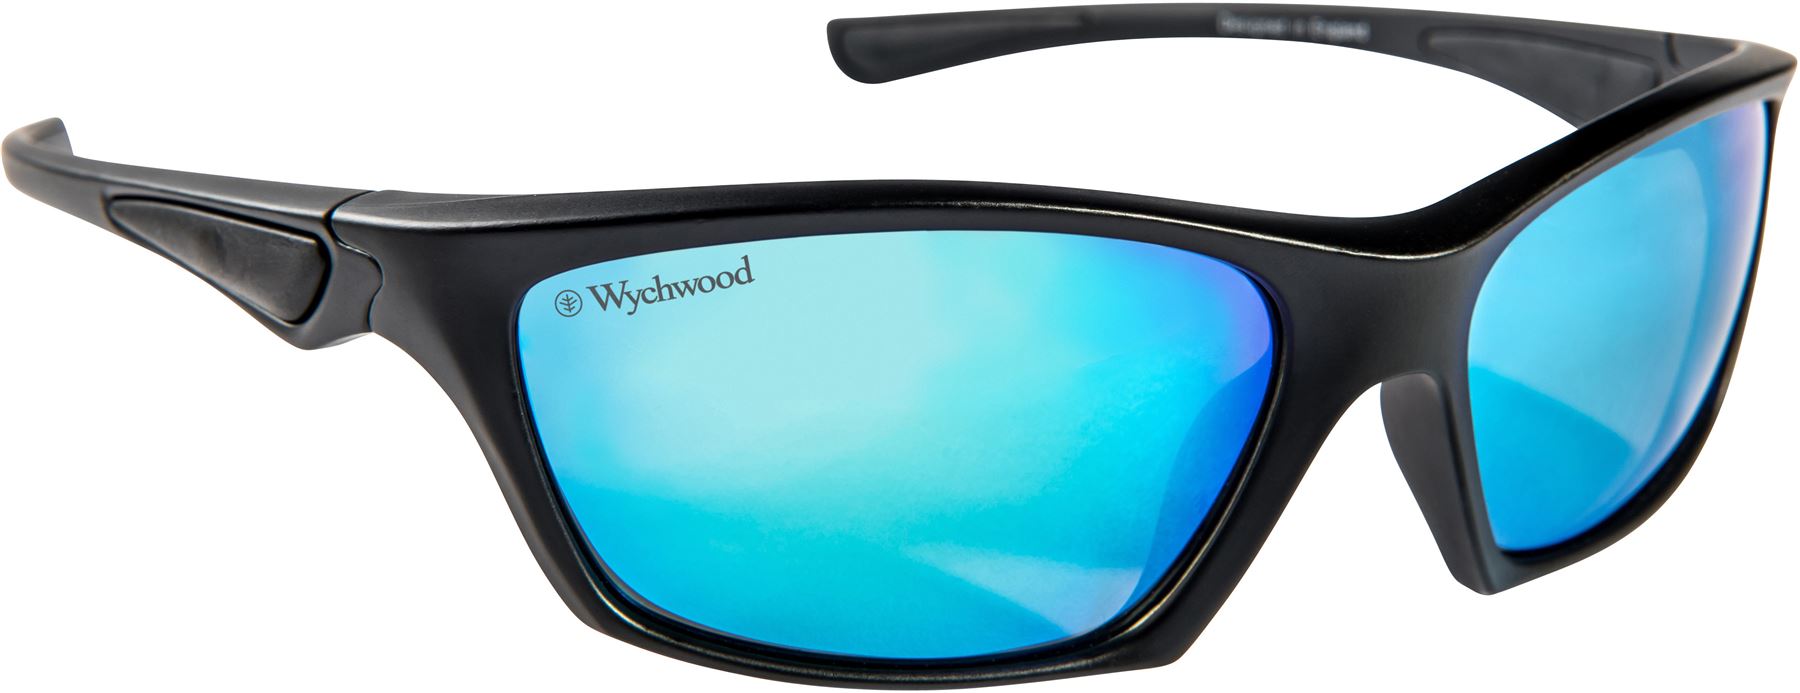 Wychwood Mirror Lens Sunglasses